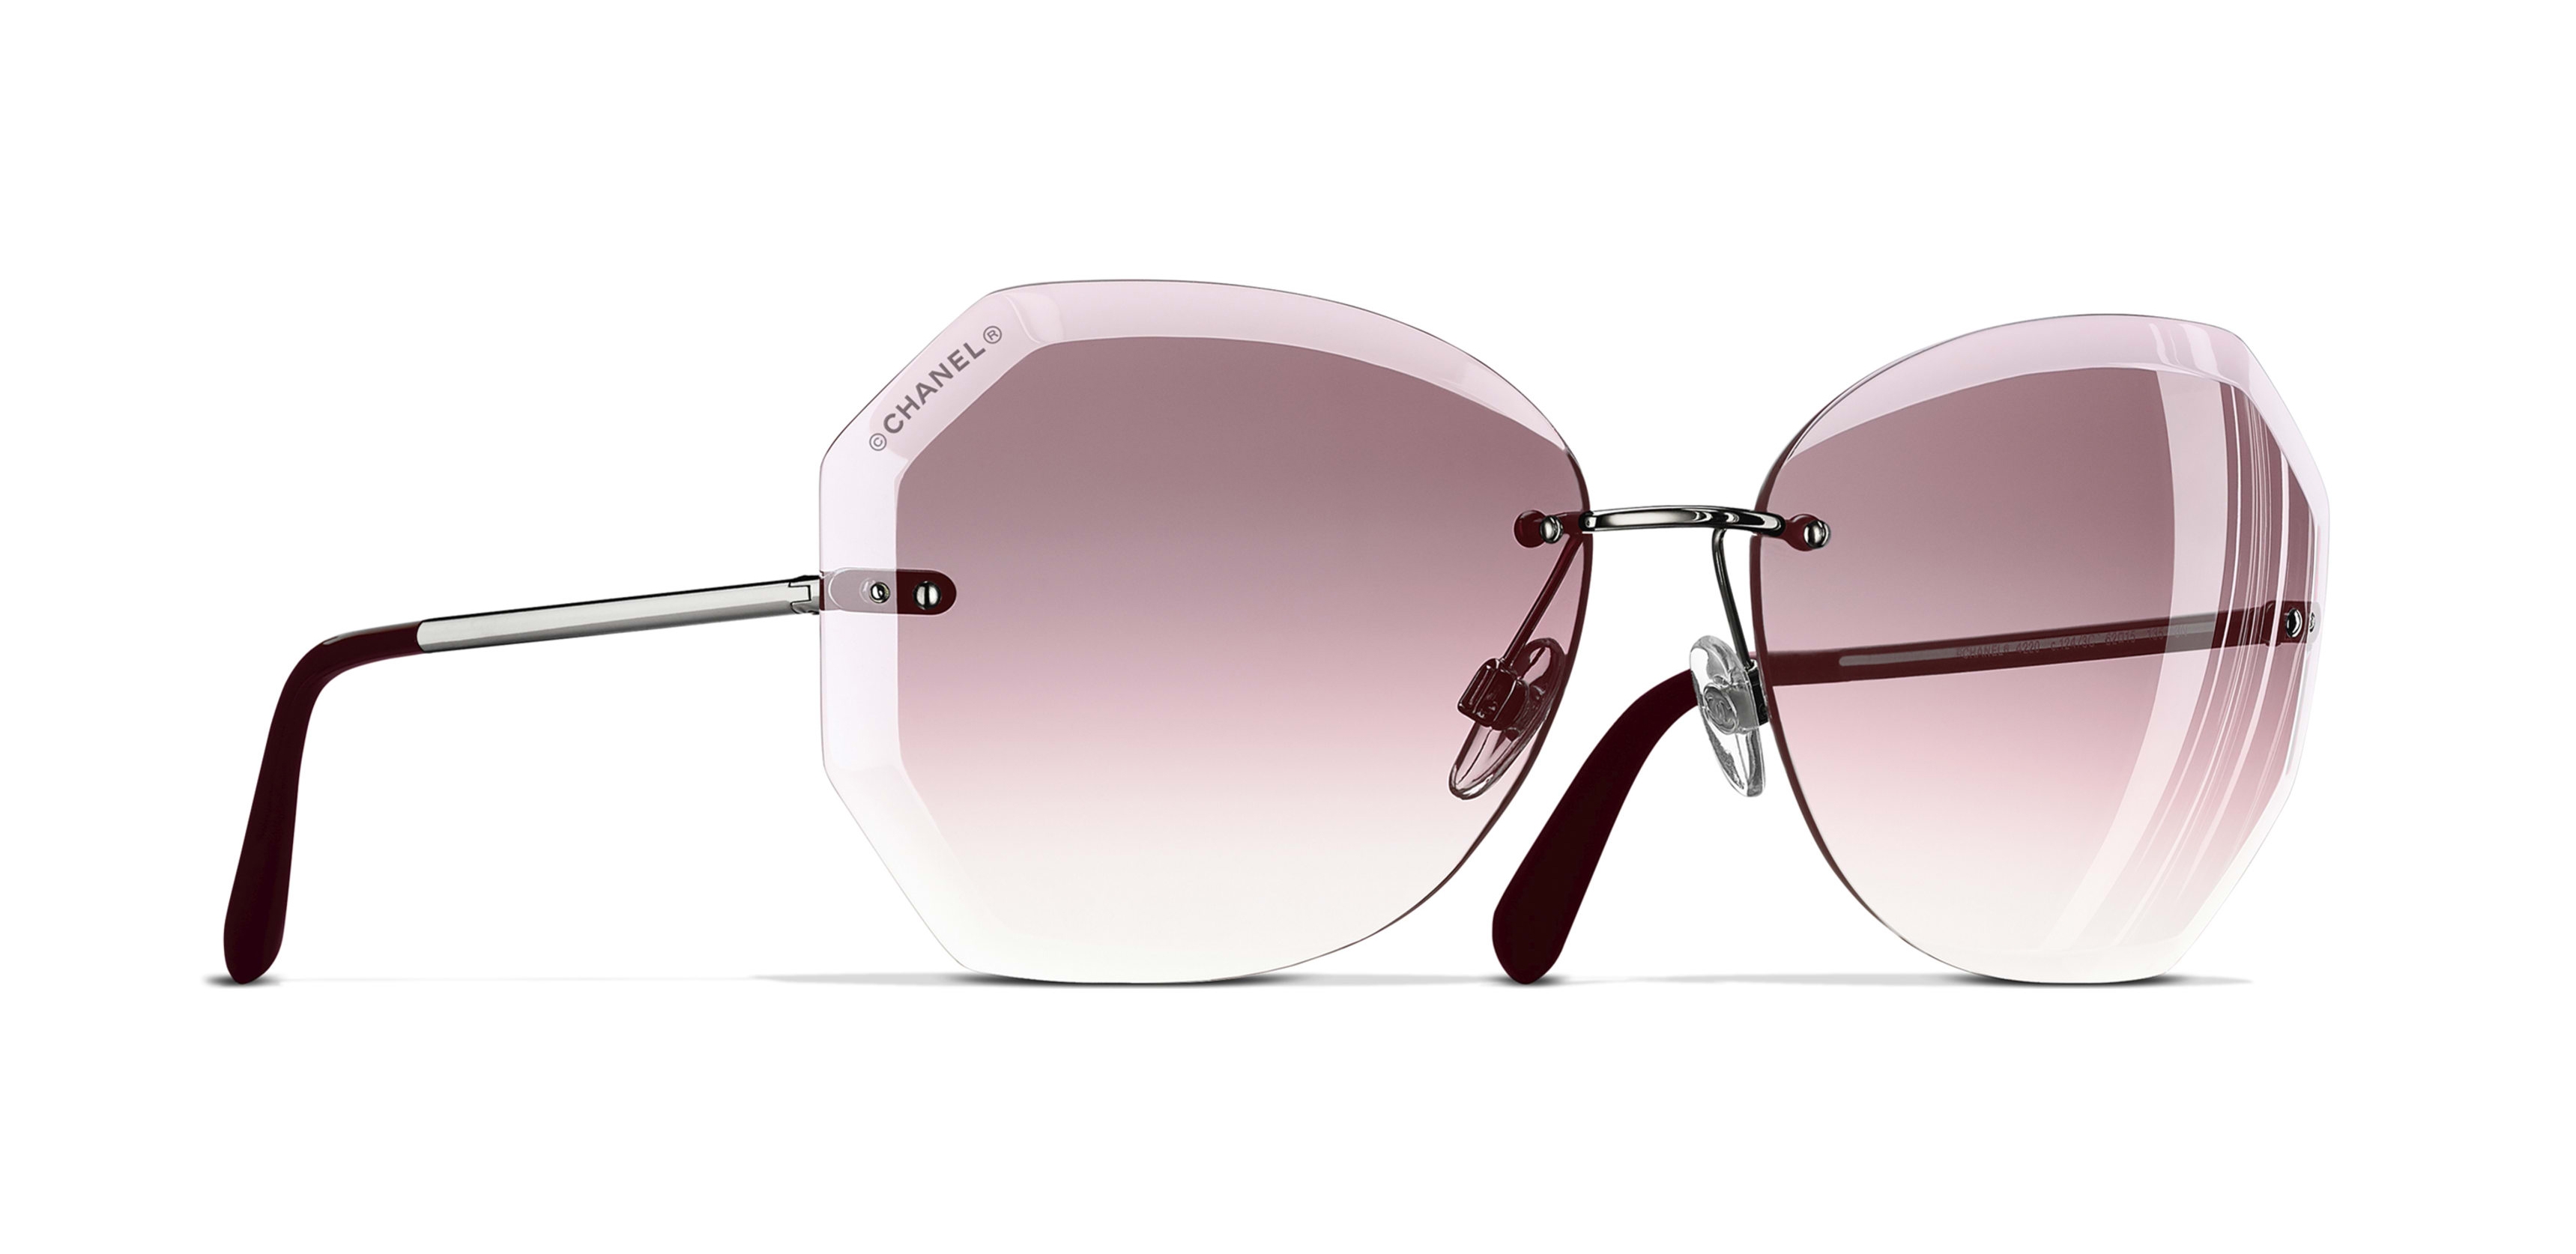 Chanel - Round Sunglasses - Silver Pink - Chanel Eyewear - Avvenice